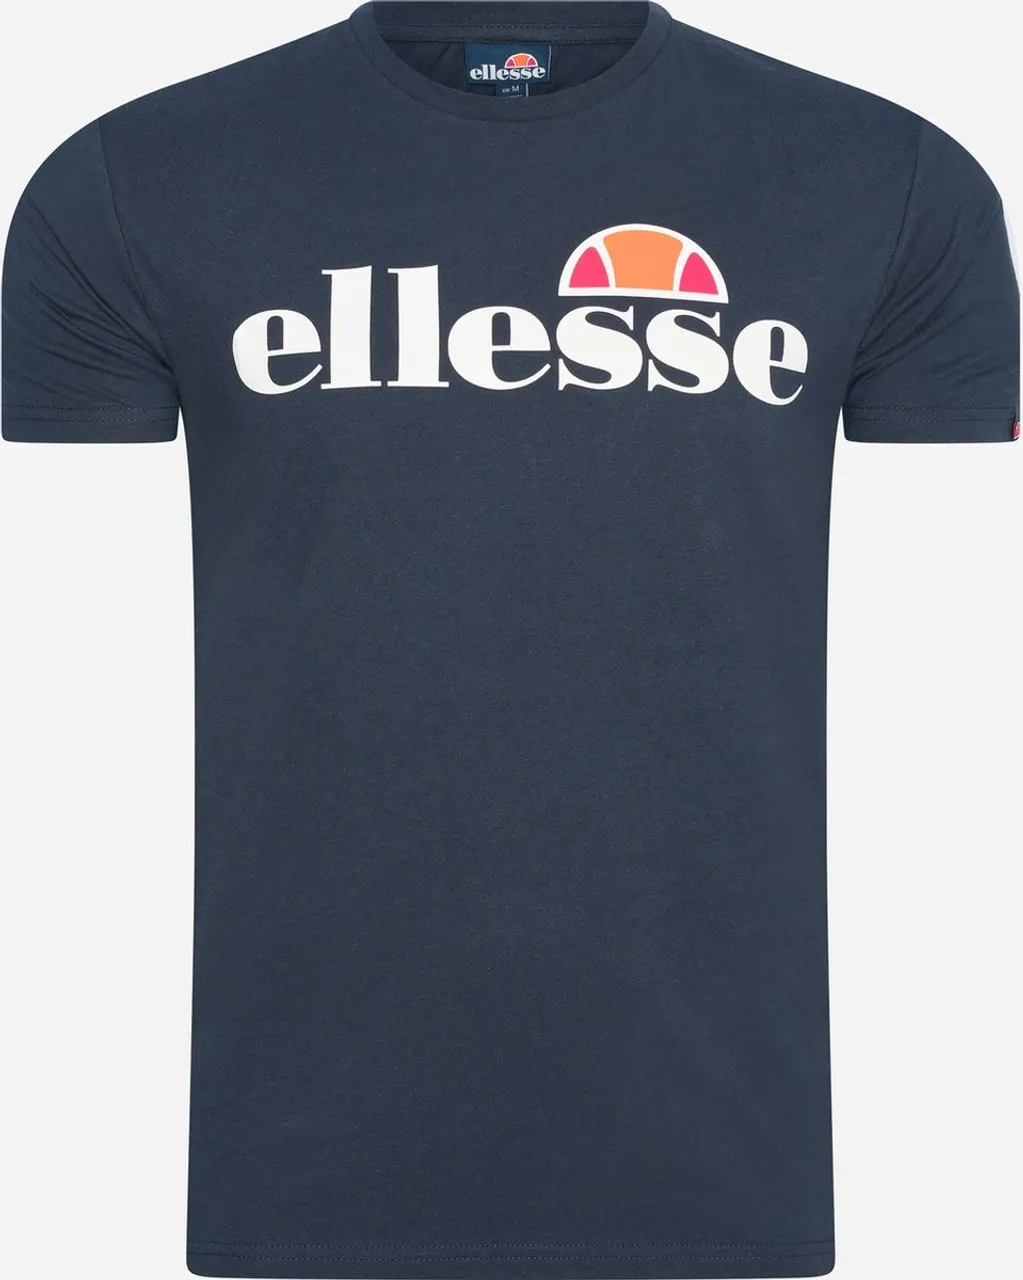 ELLESSE Prado caustic t shirt Navy S